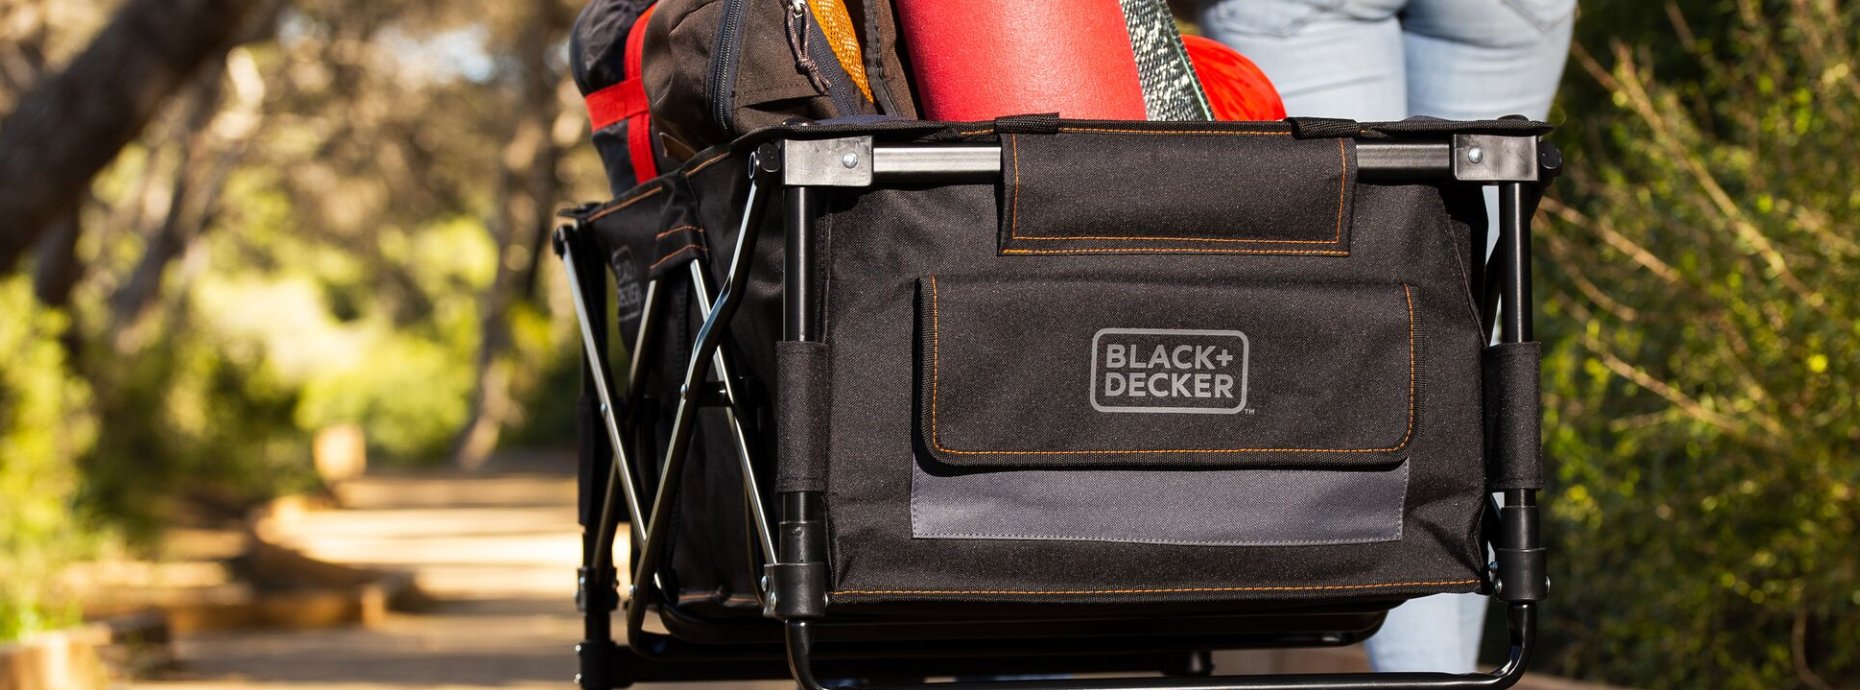 Black & Decker Tool Bags